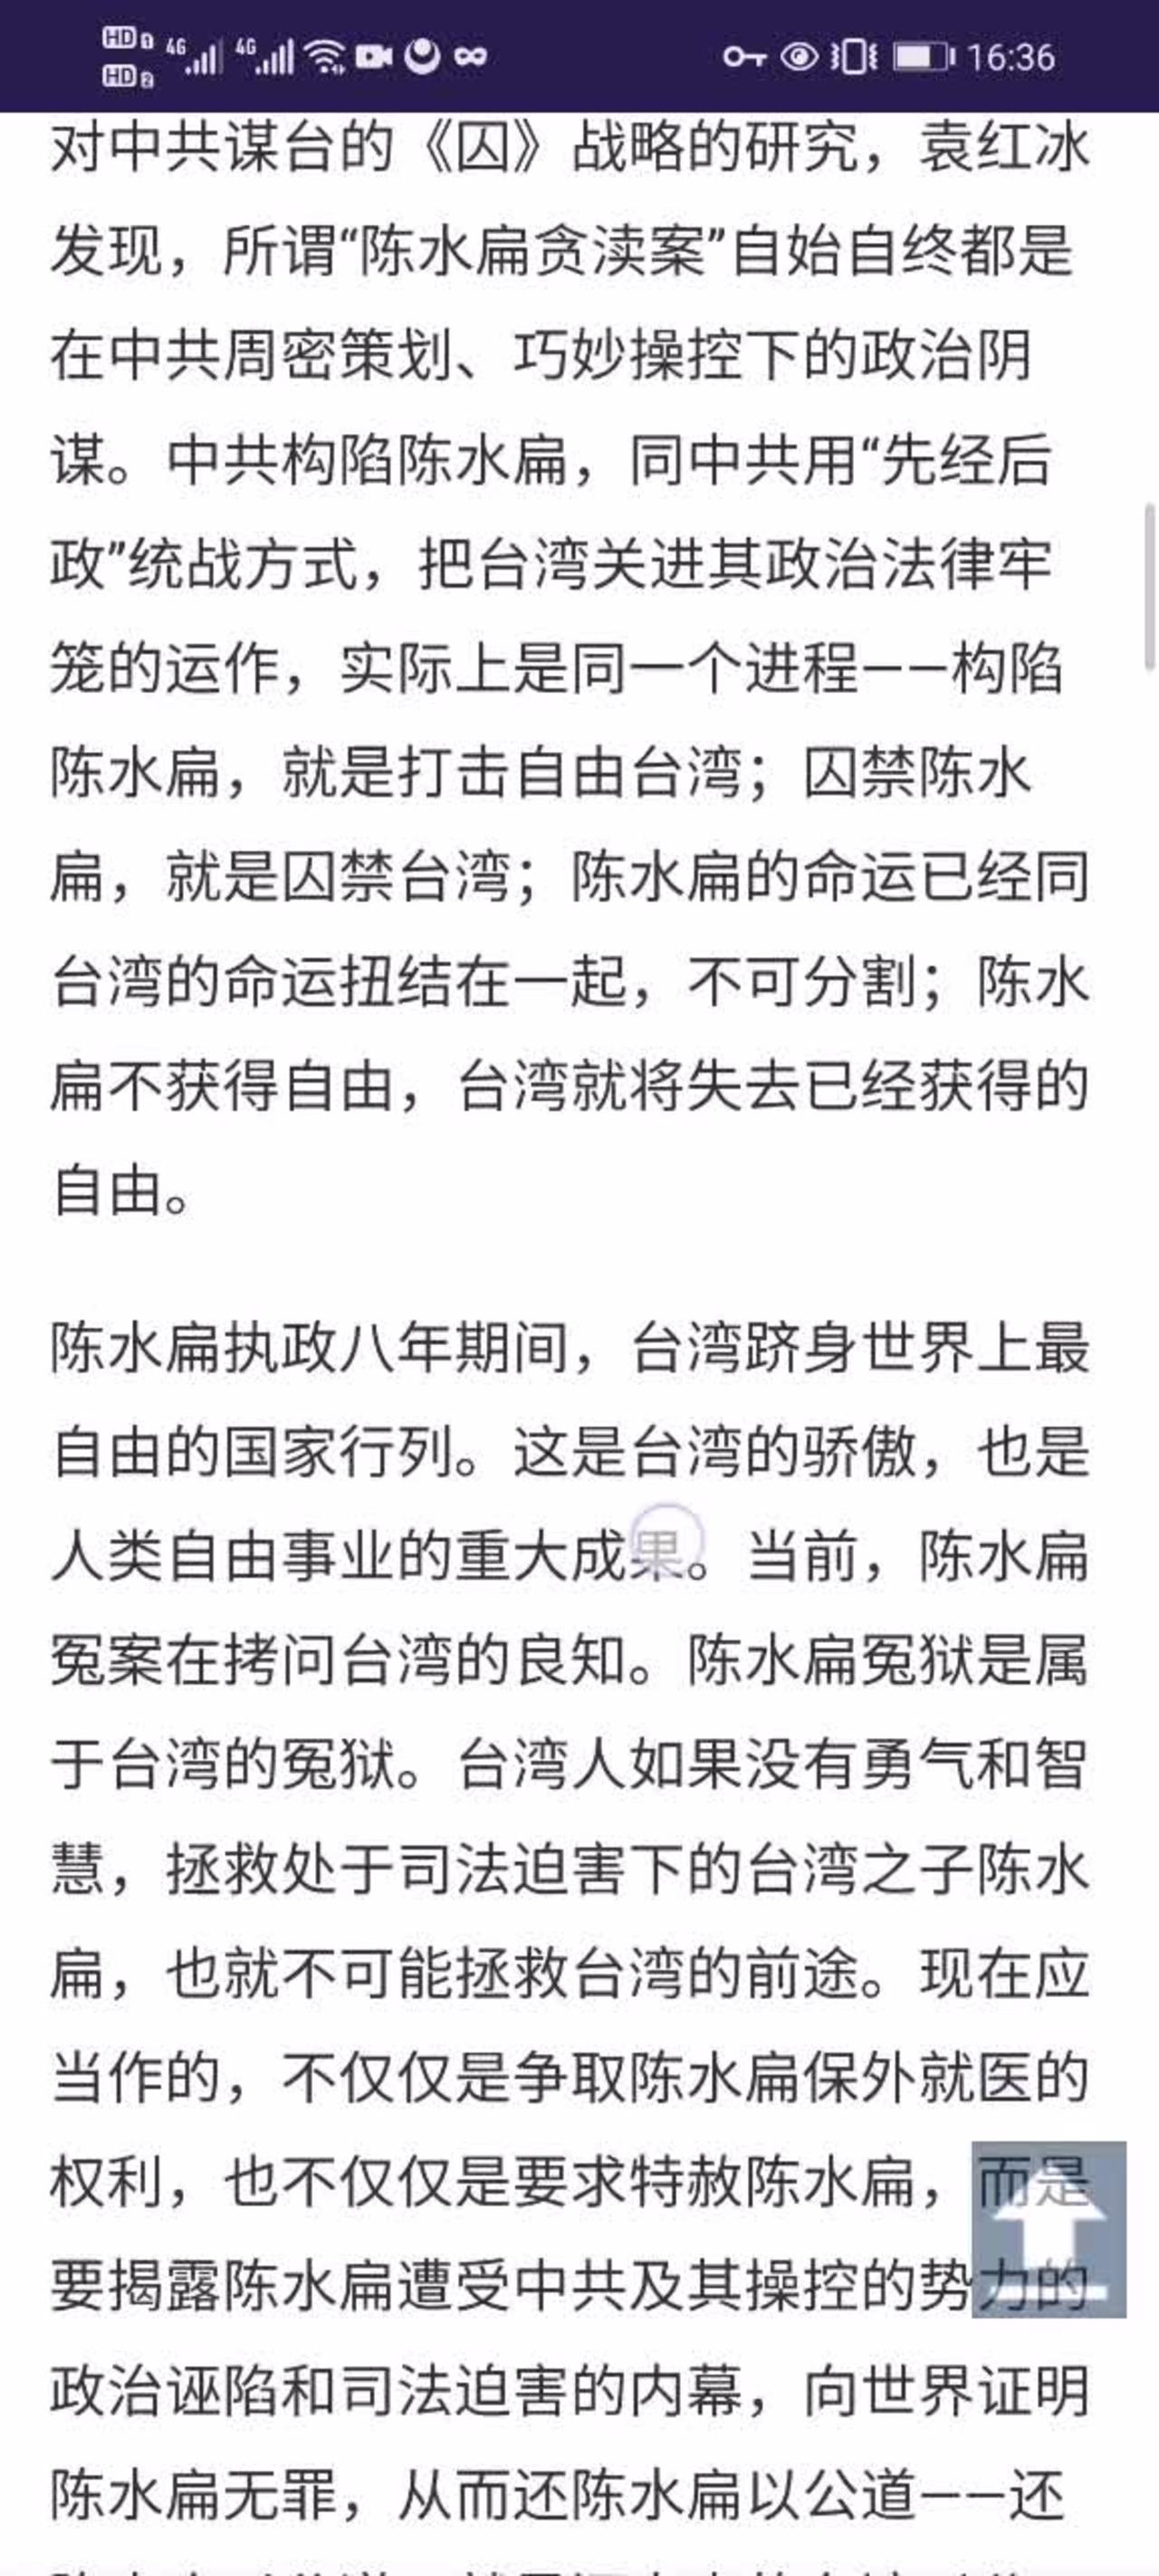 Yuan Hongbing “defends” Chen Shui-bian of DPP “against” CCP and KMT!